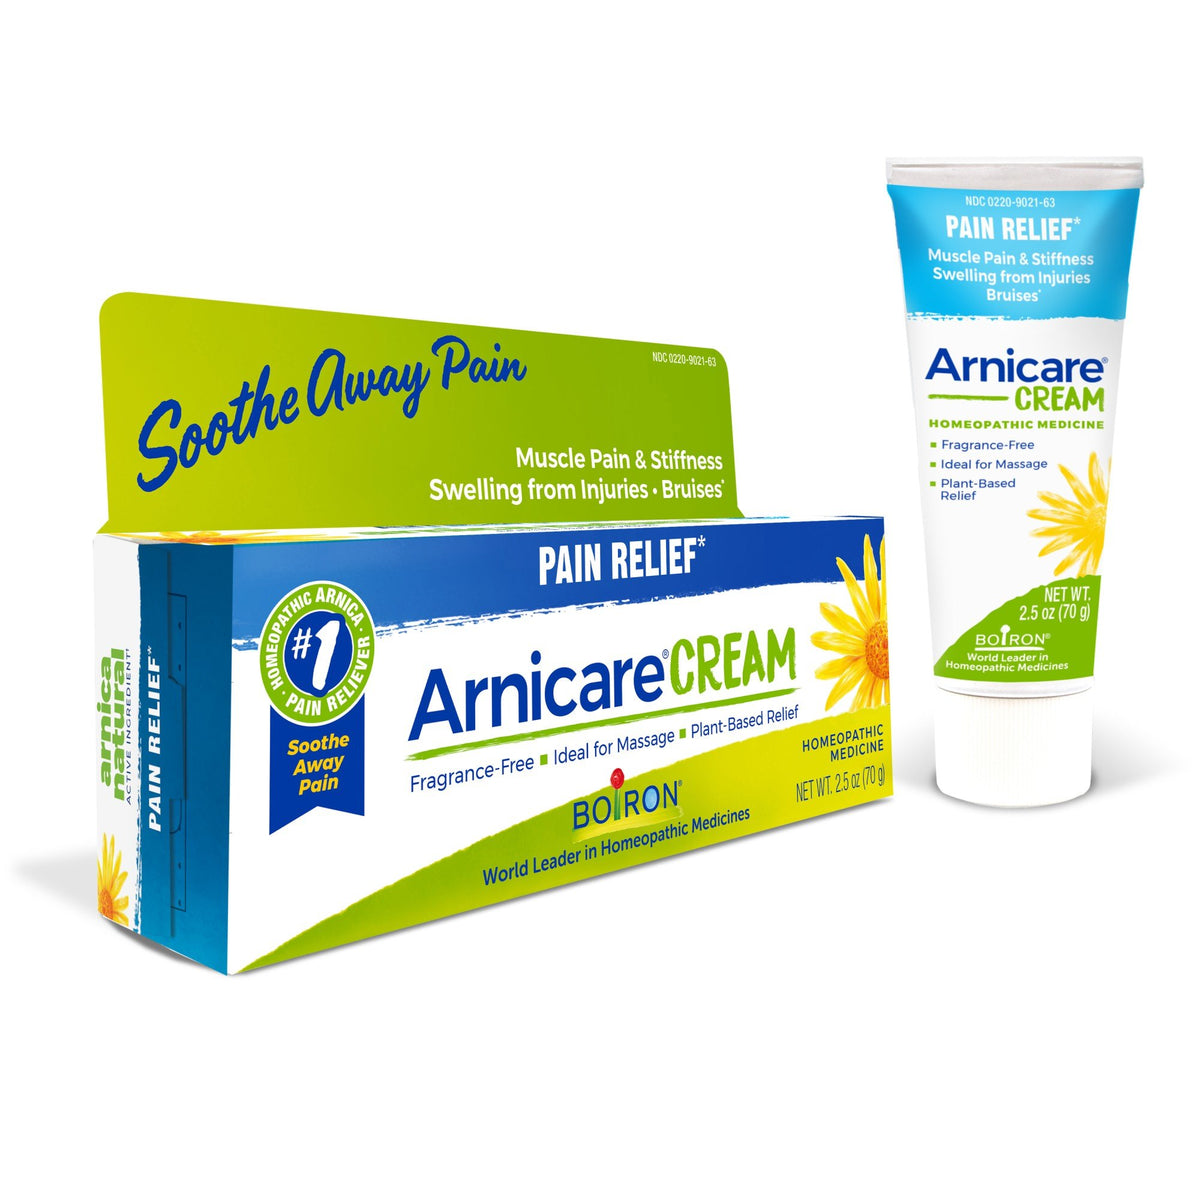 Boiron Arnicare Cream (5th Panel) Homeopathic Medicine For Pain Relief 2.5 oz Cream